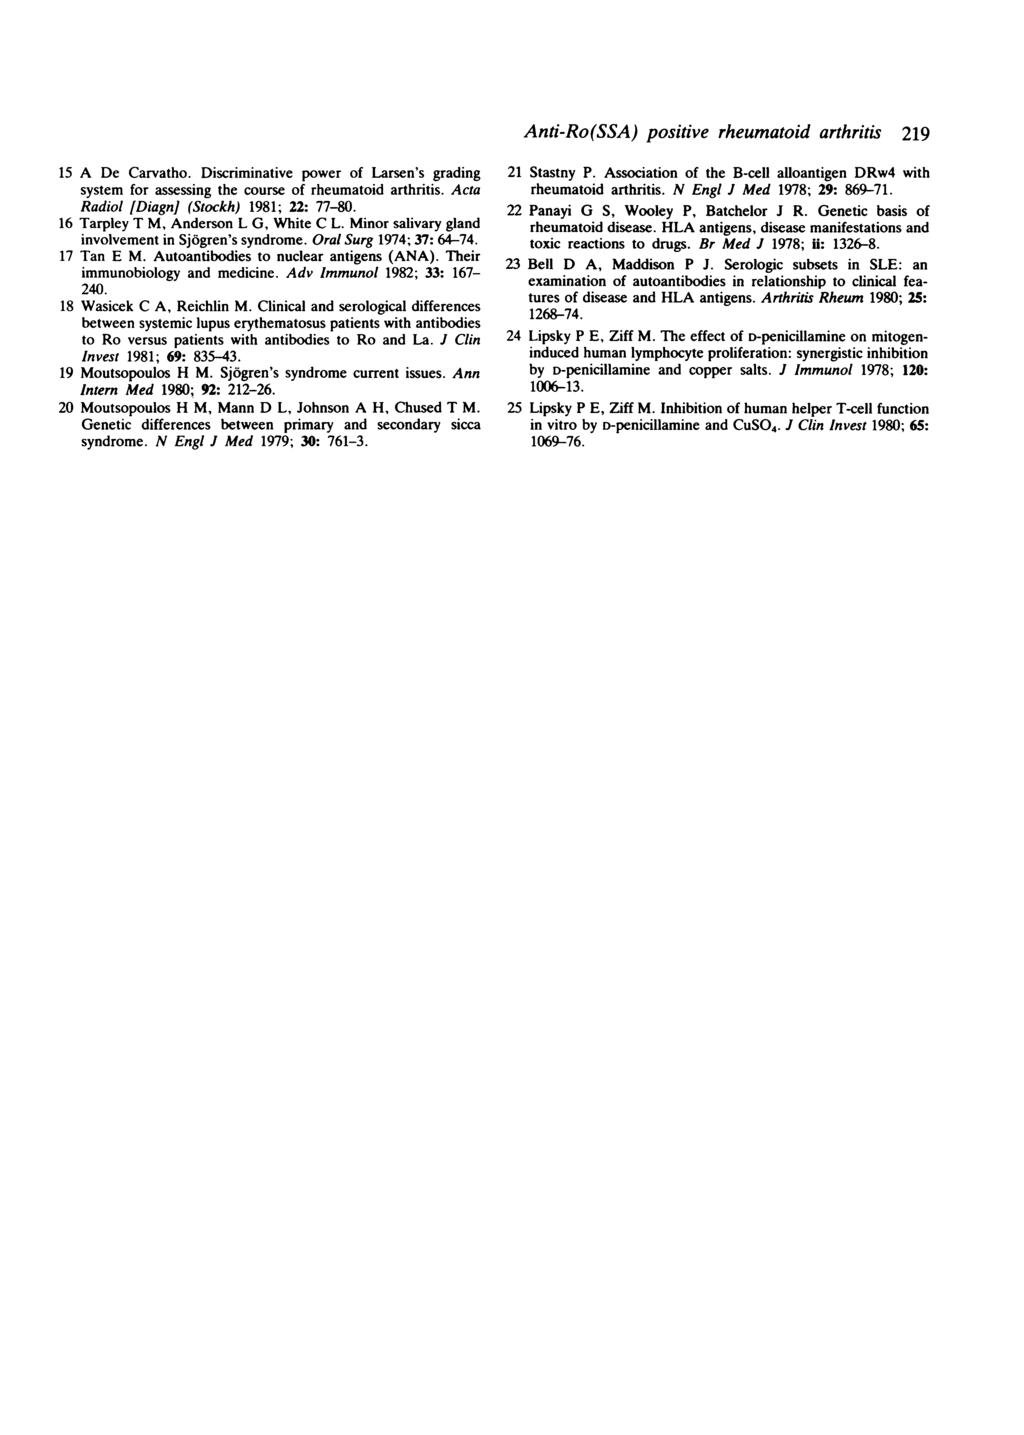 15 A De Carvatho. Discriminative power of Larsen's grading system for assessing the course of rheumatoid arthritis. Acta Radiol [Diagni (Stockh) 1981; 22: 77-80.